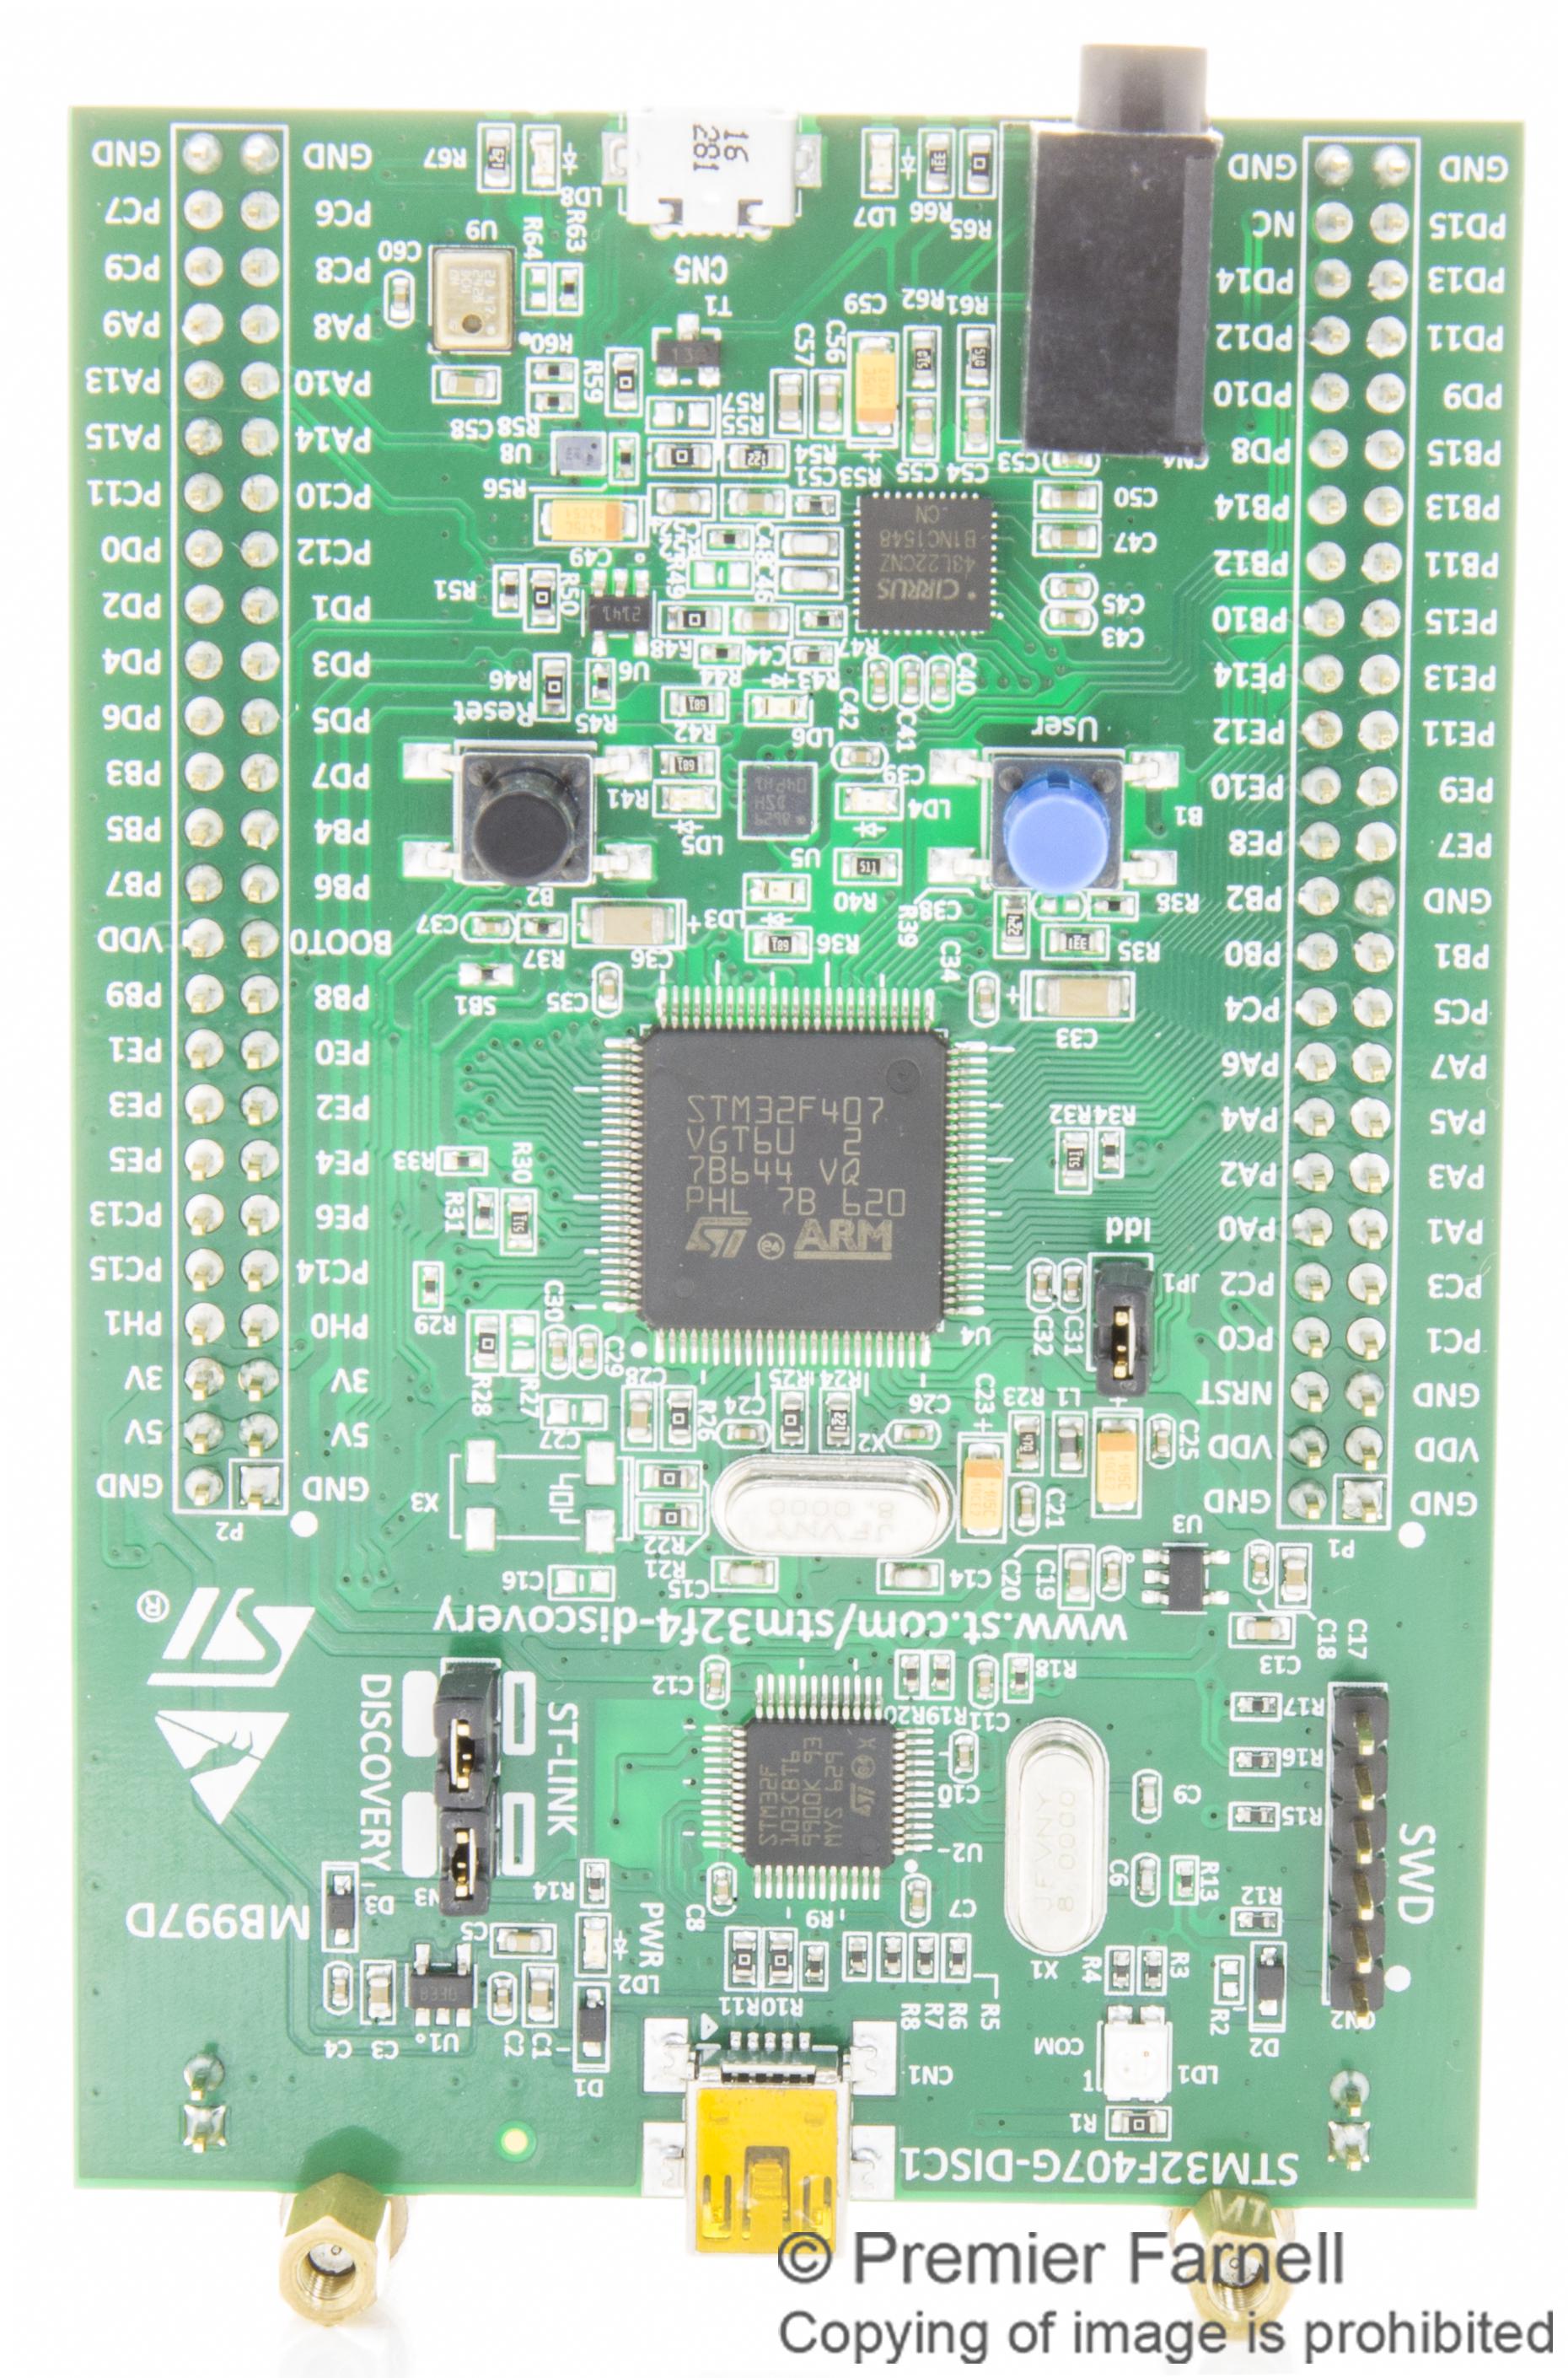 STM32F407G-DISC1 DEV BOARD, FOUNDATION LINE MCU STMICROELECTRONICS